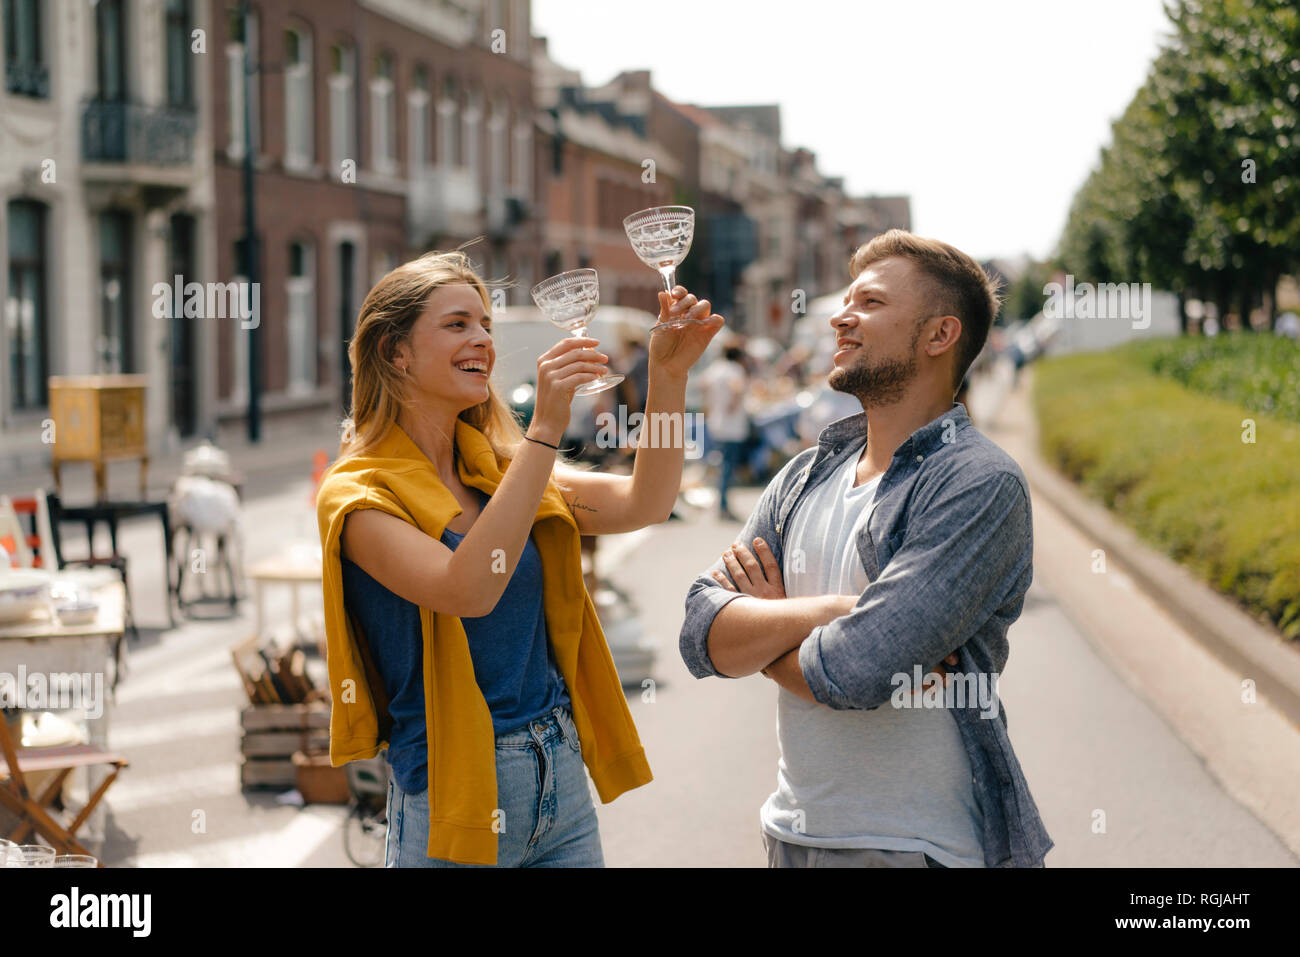 Belgium, Tongeren, happy young couple with glasses on an antique flea market Stock Photo